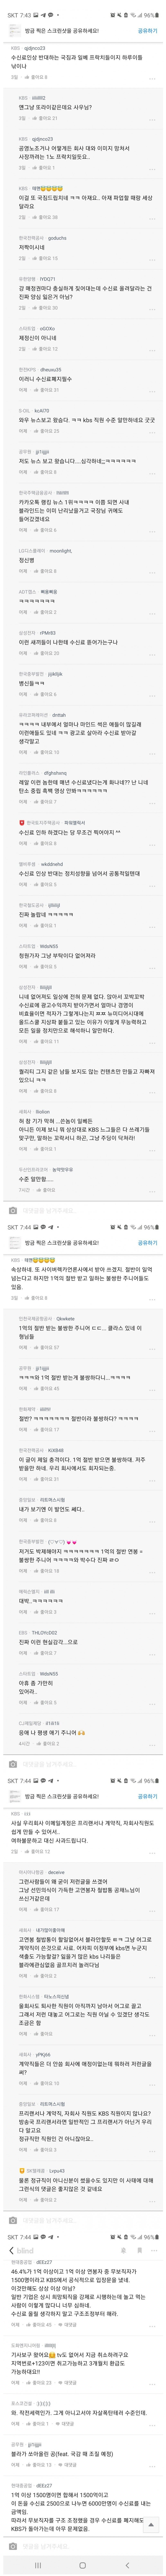 KBS 수신료 인상 블라인드 댓글들